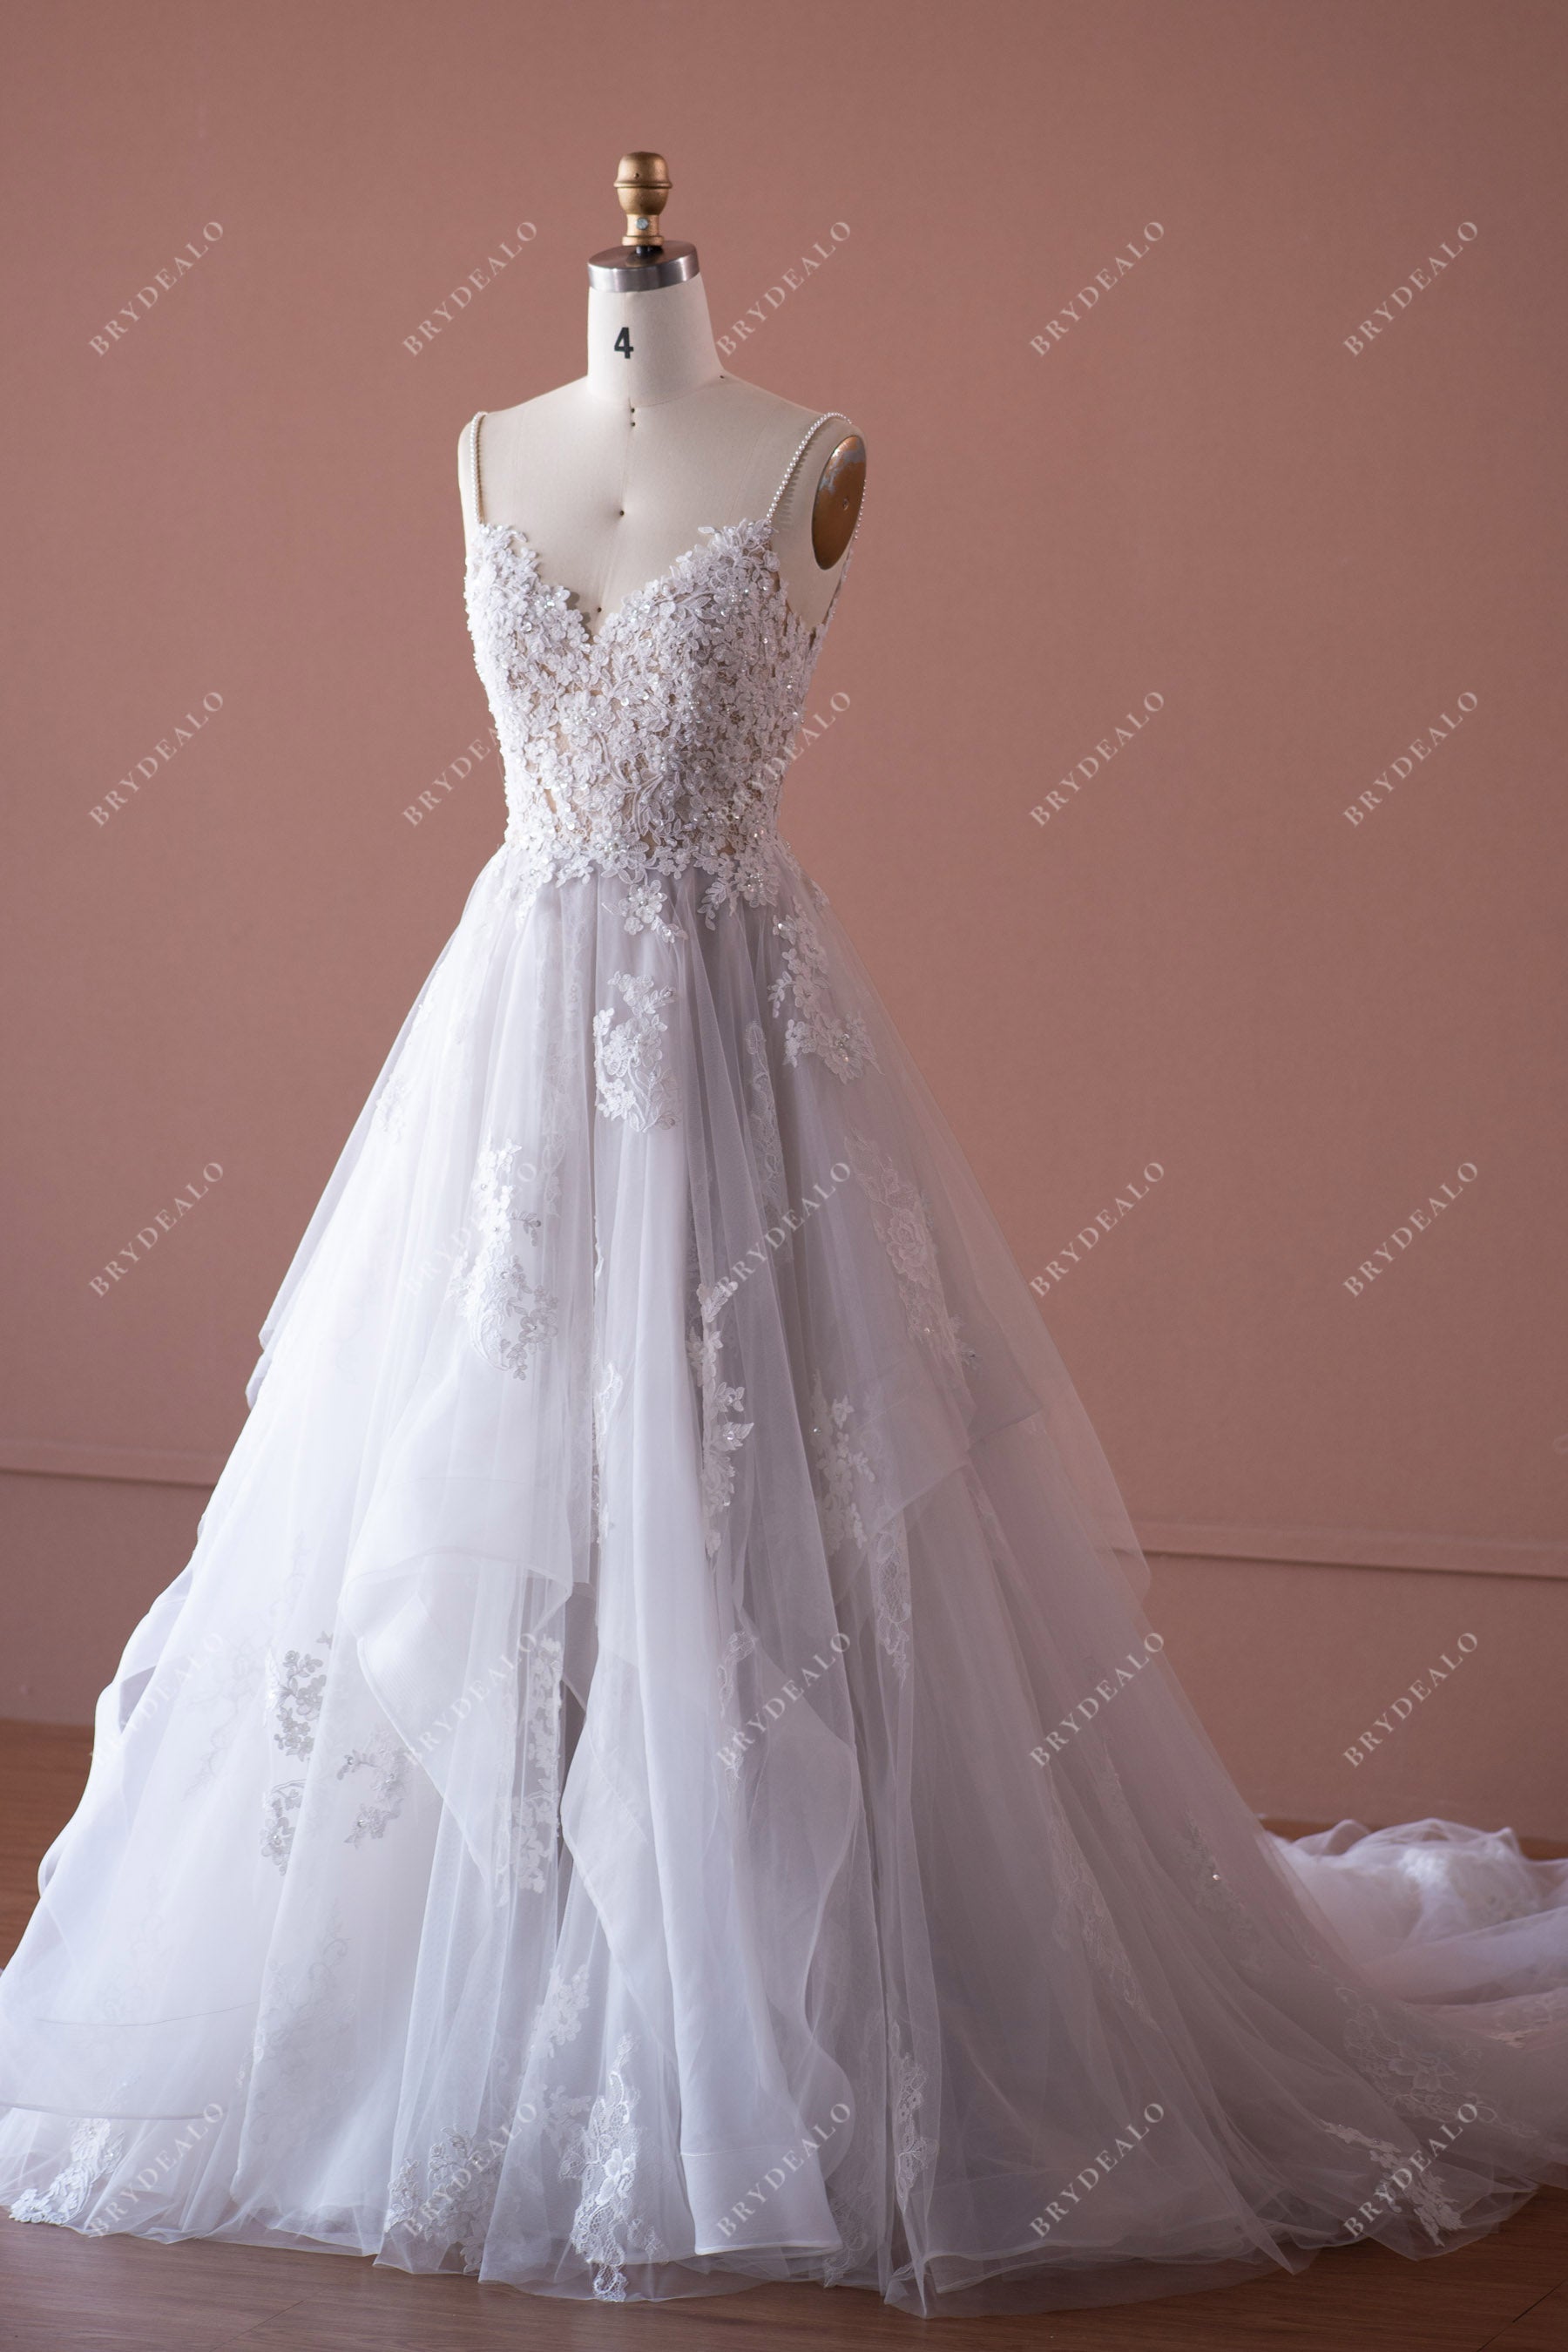 Spaghetti Strap Lace Ruffled Ballgown Sample Sale Wedding Dress